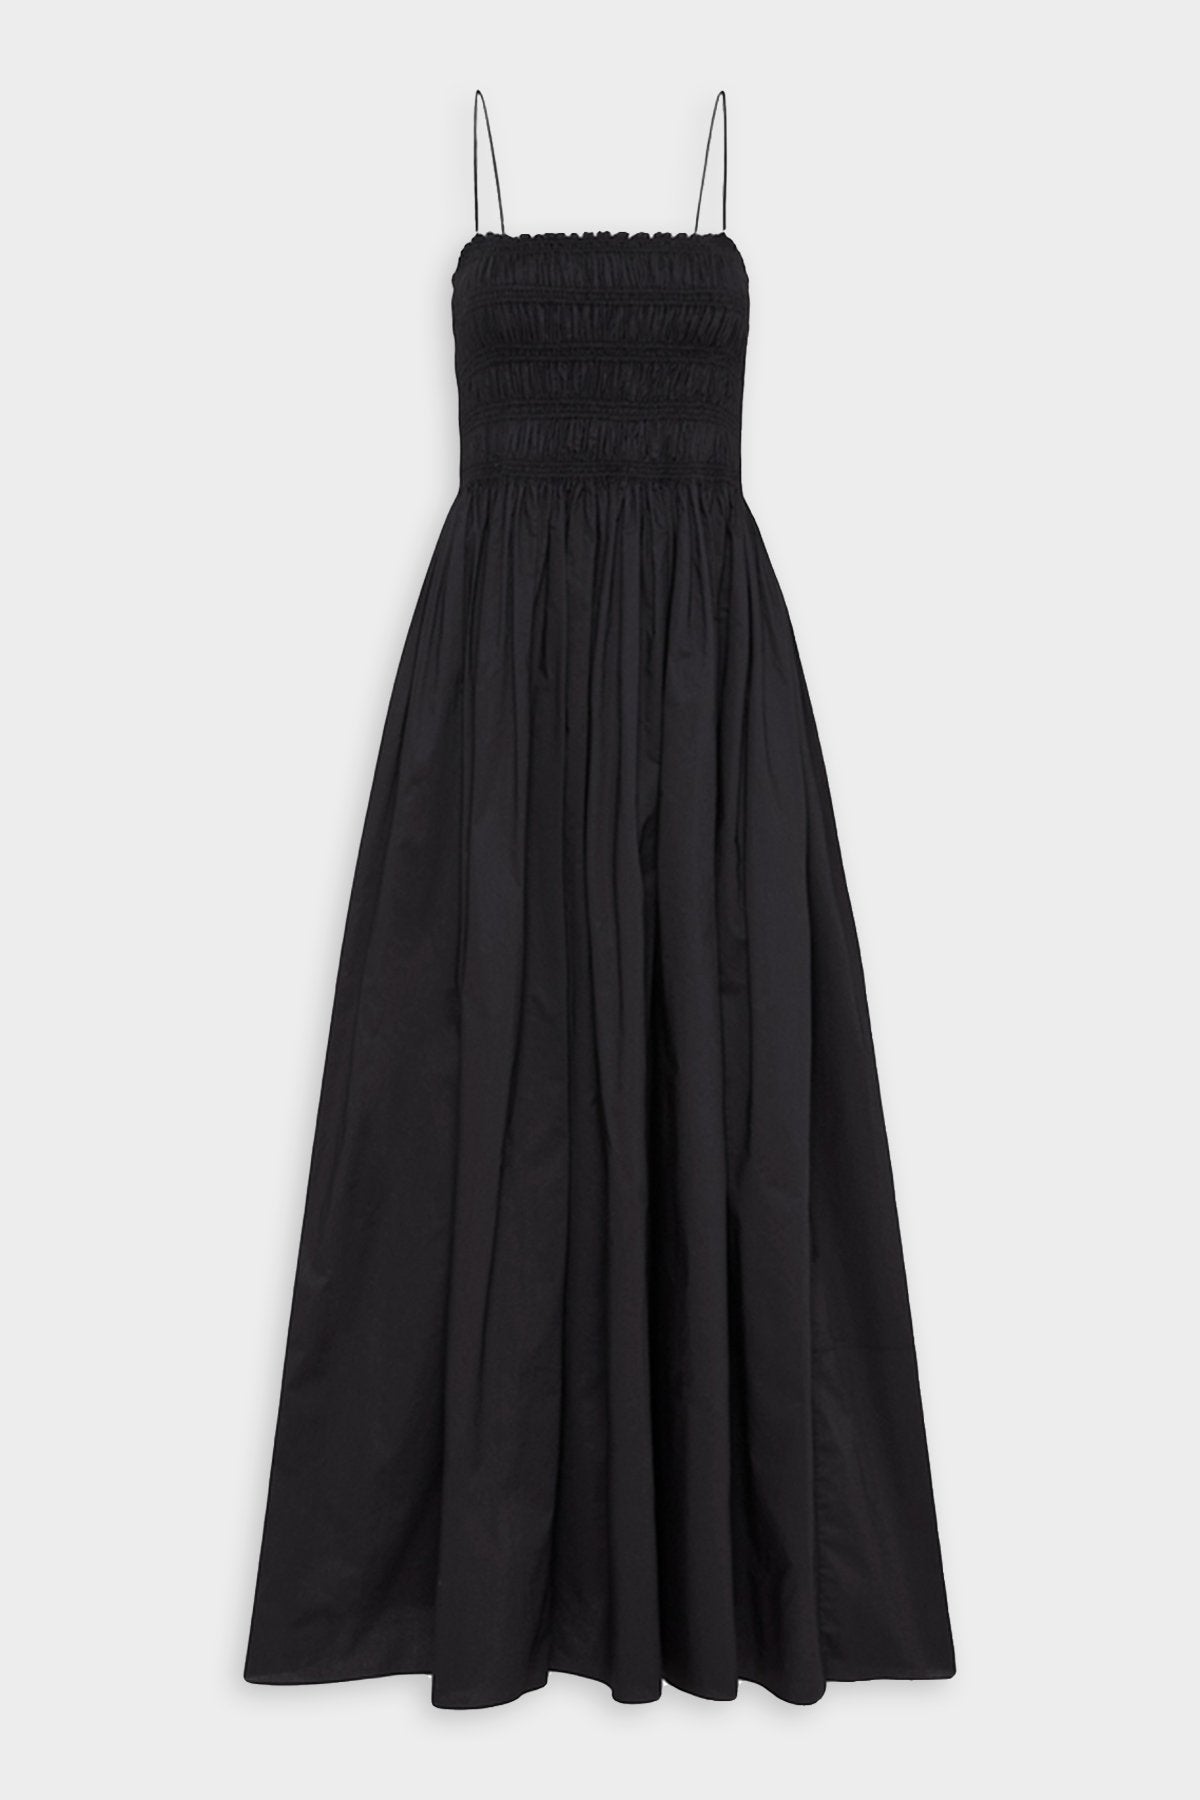 Shirred Bodice Dress in Black - shop-olivia.com